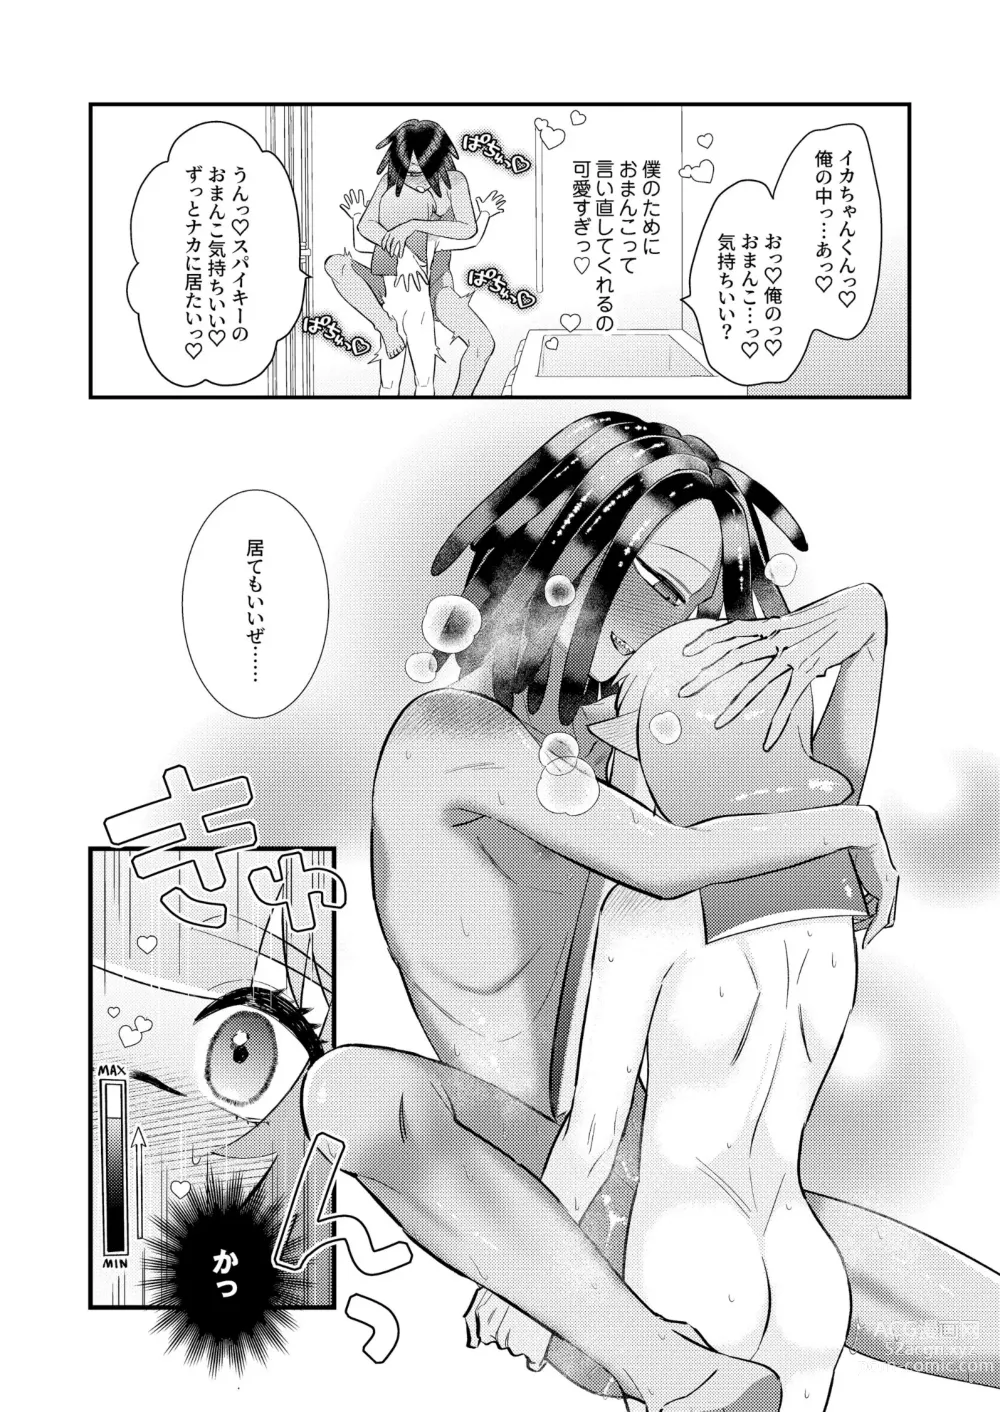 Page 13 of doujinshi Uketomete Hoshii no My Darling! - I want you to accept me my darling!